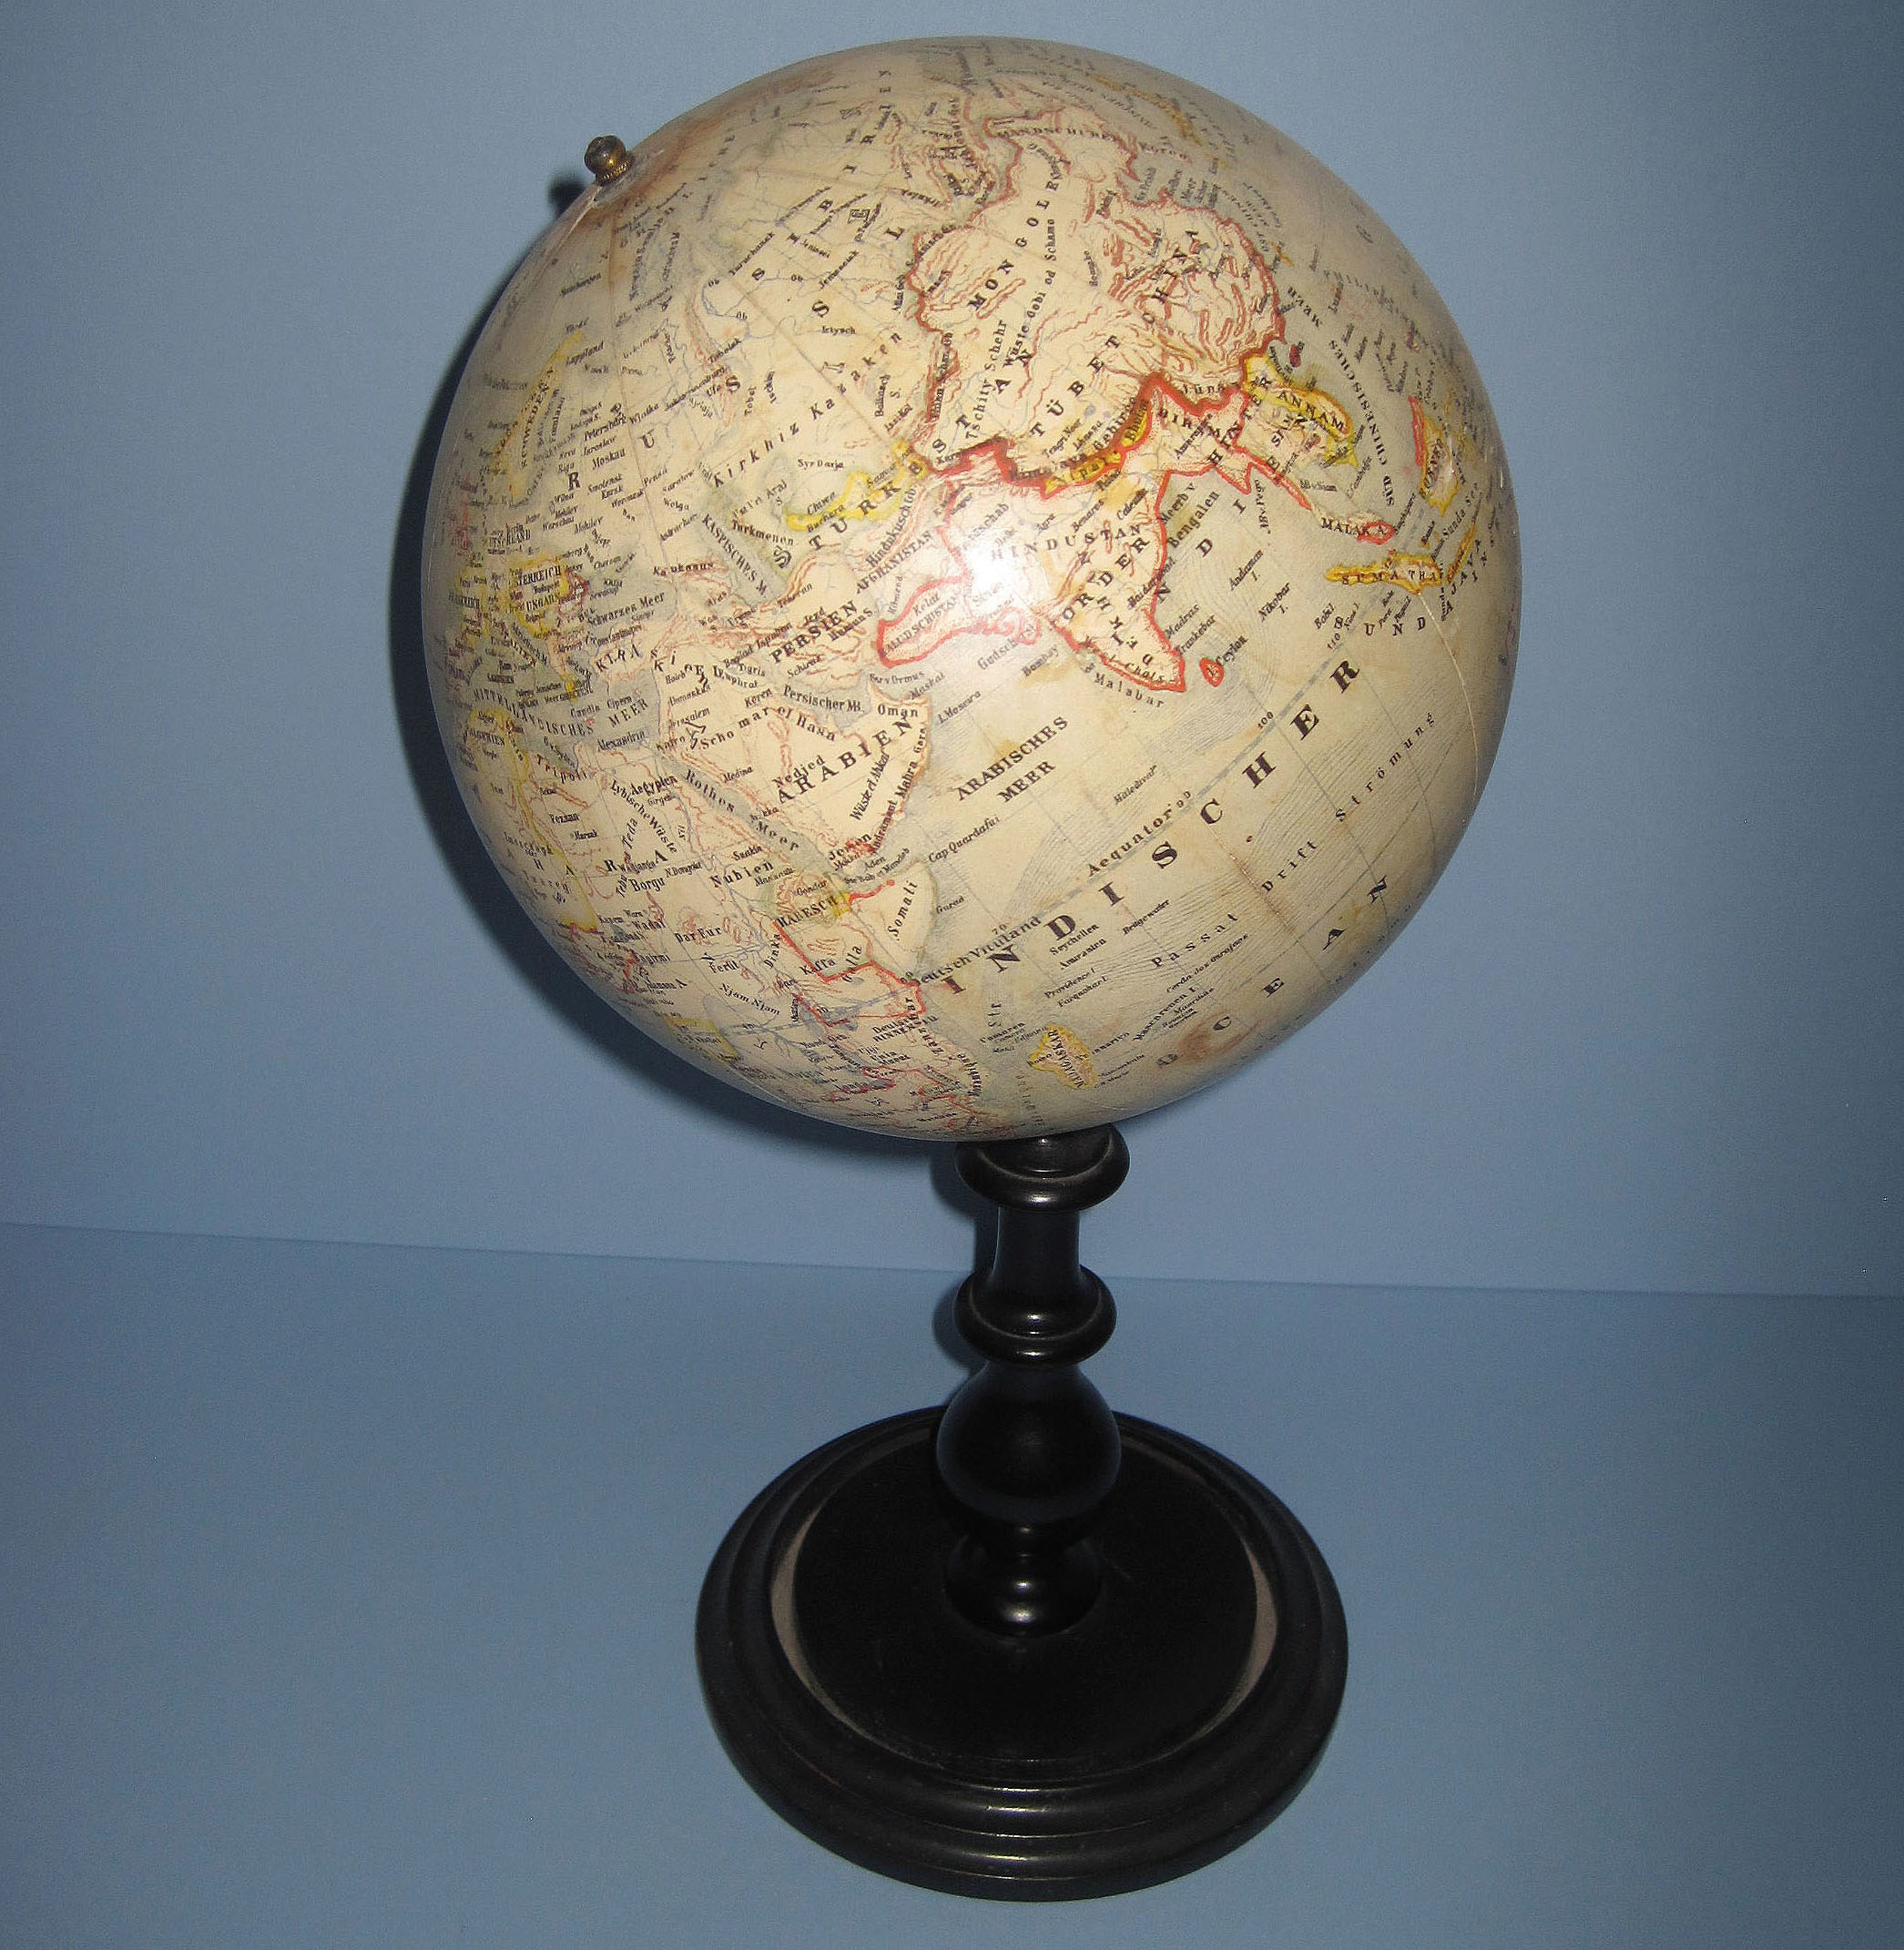 Felkl Terrestrial Globe by Professor Otto Delitsch